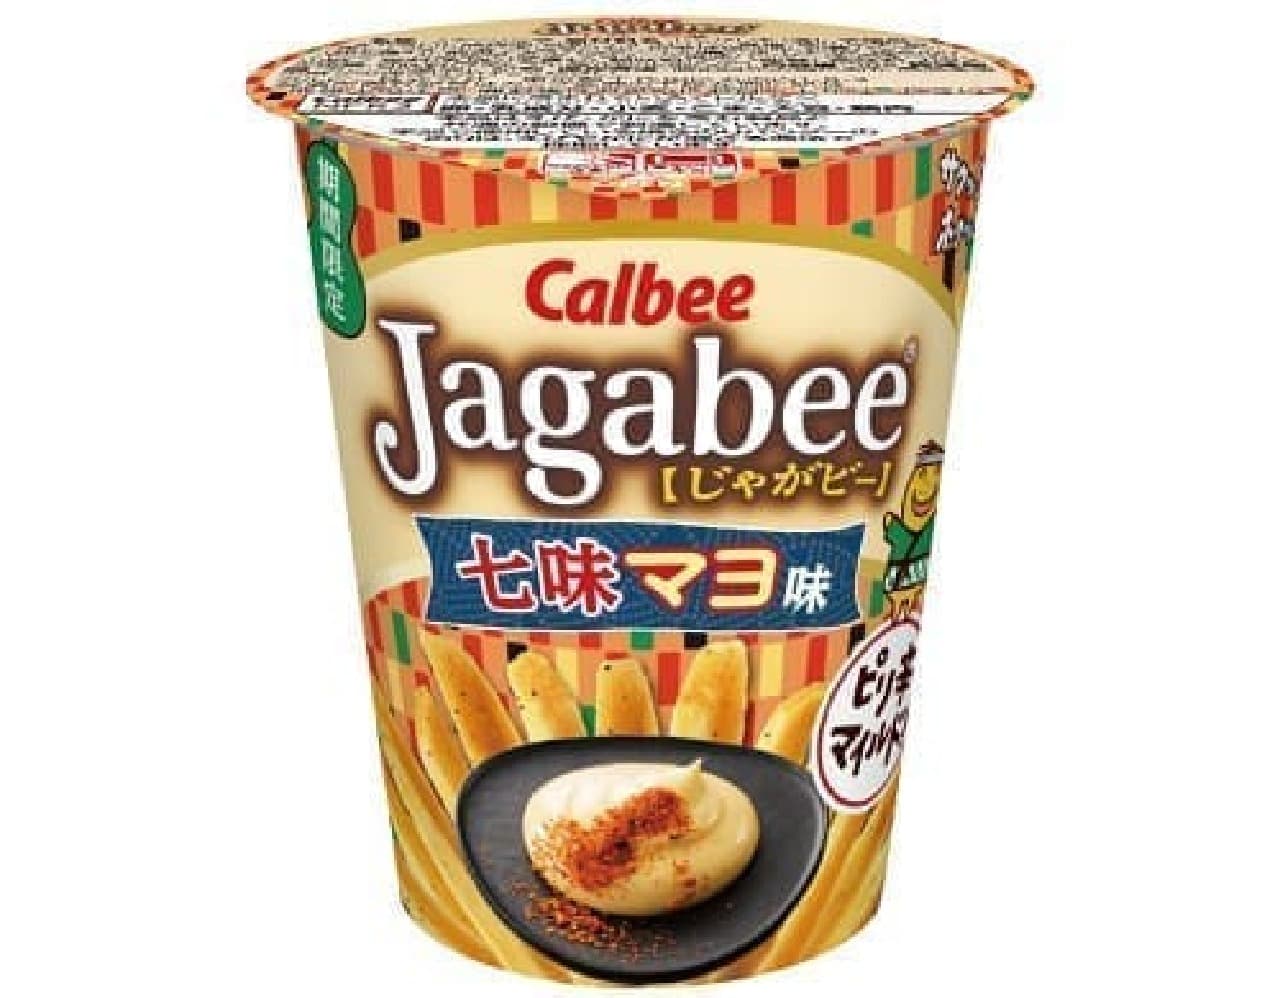 Calbee "Jagabee Shichimi Mayonnaise"